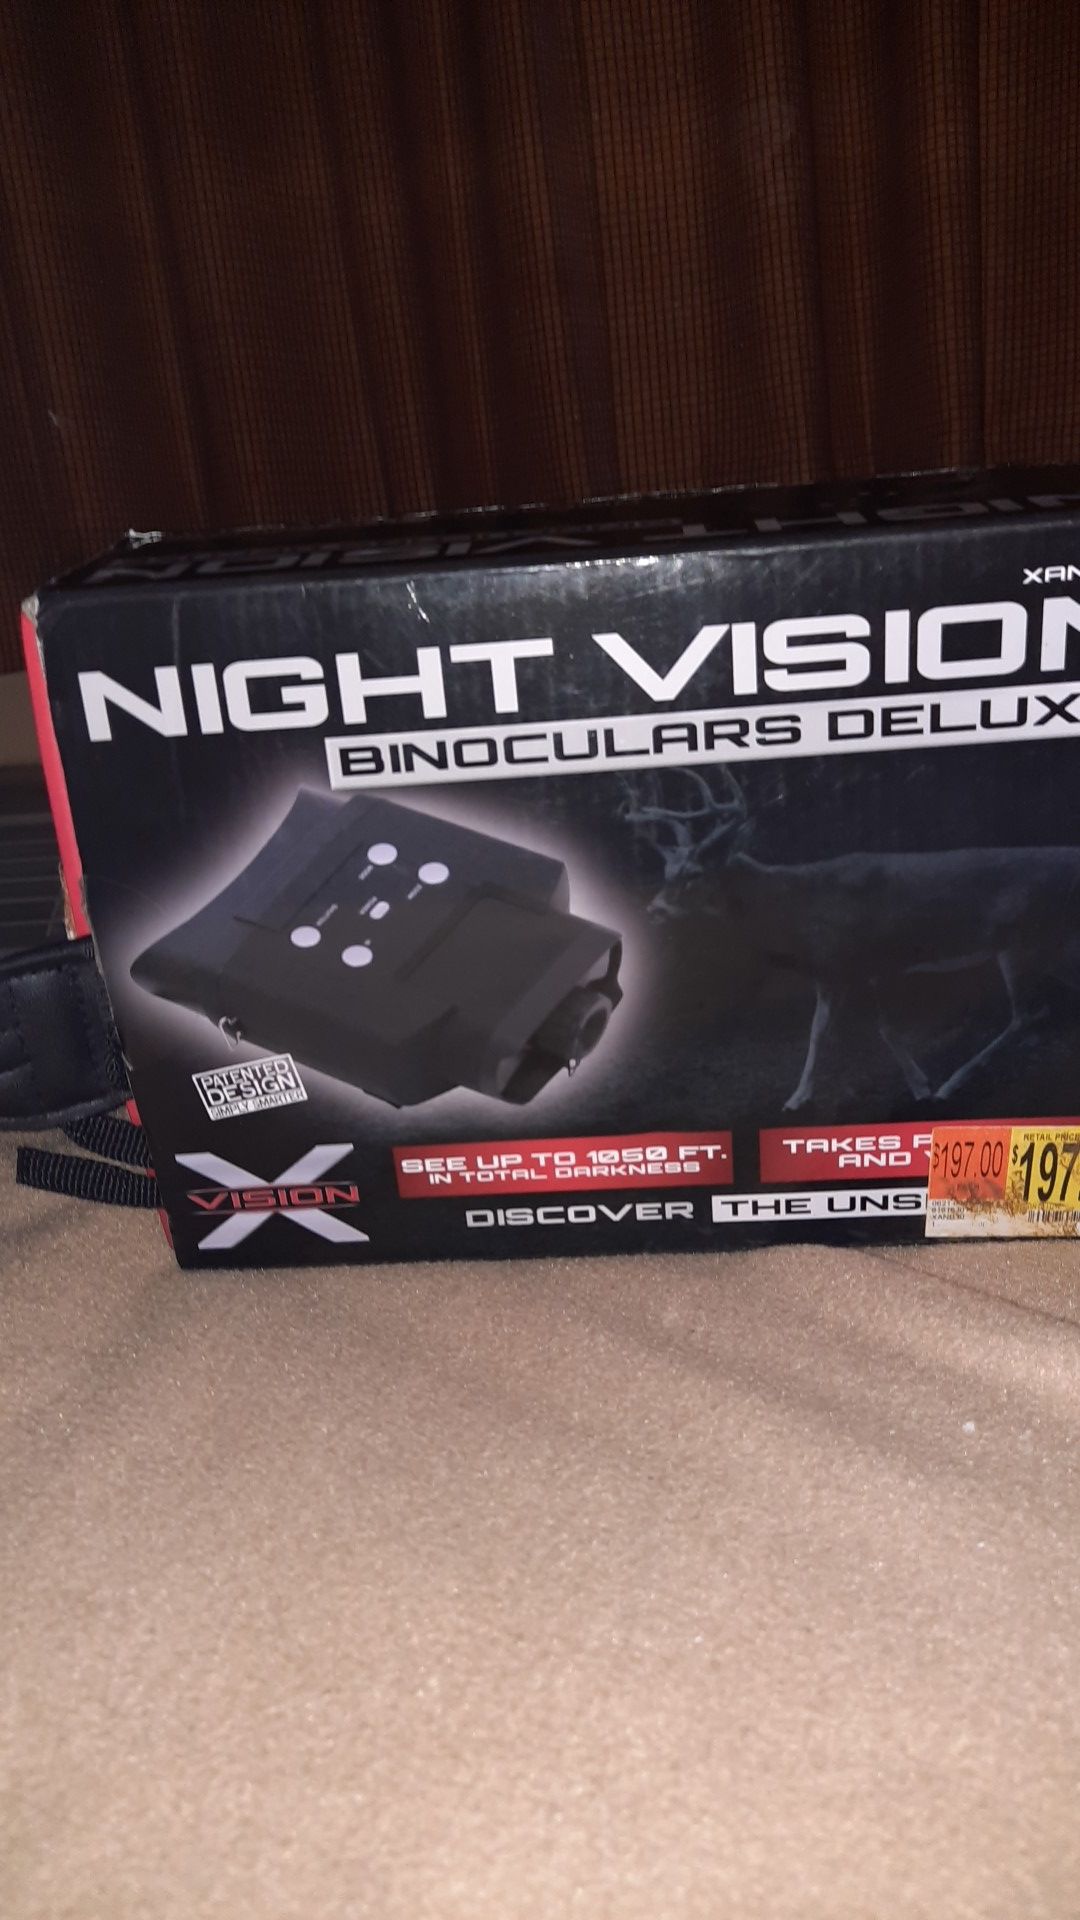 Night vision binoculars deluxe